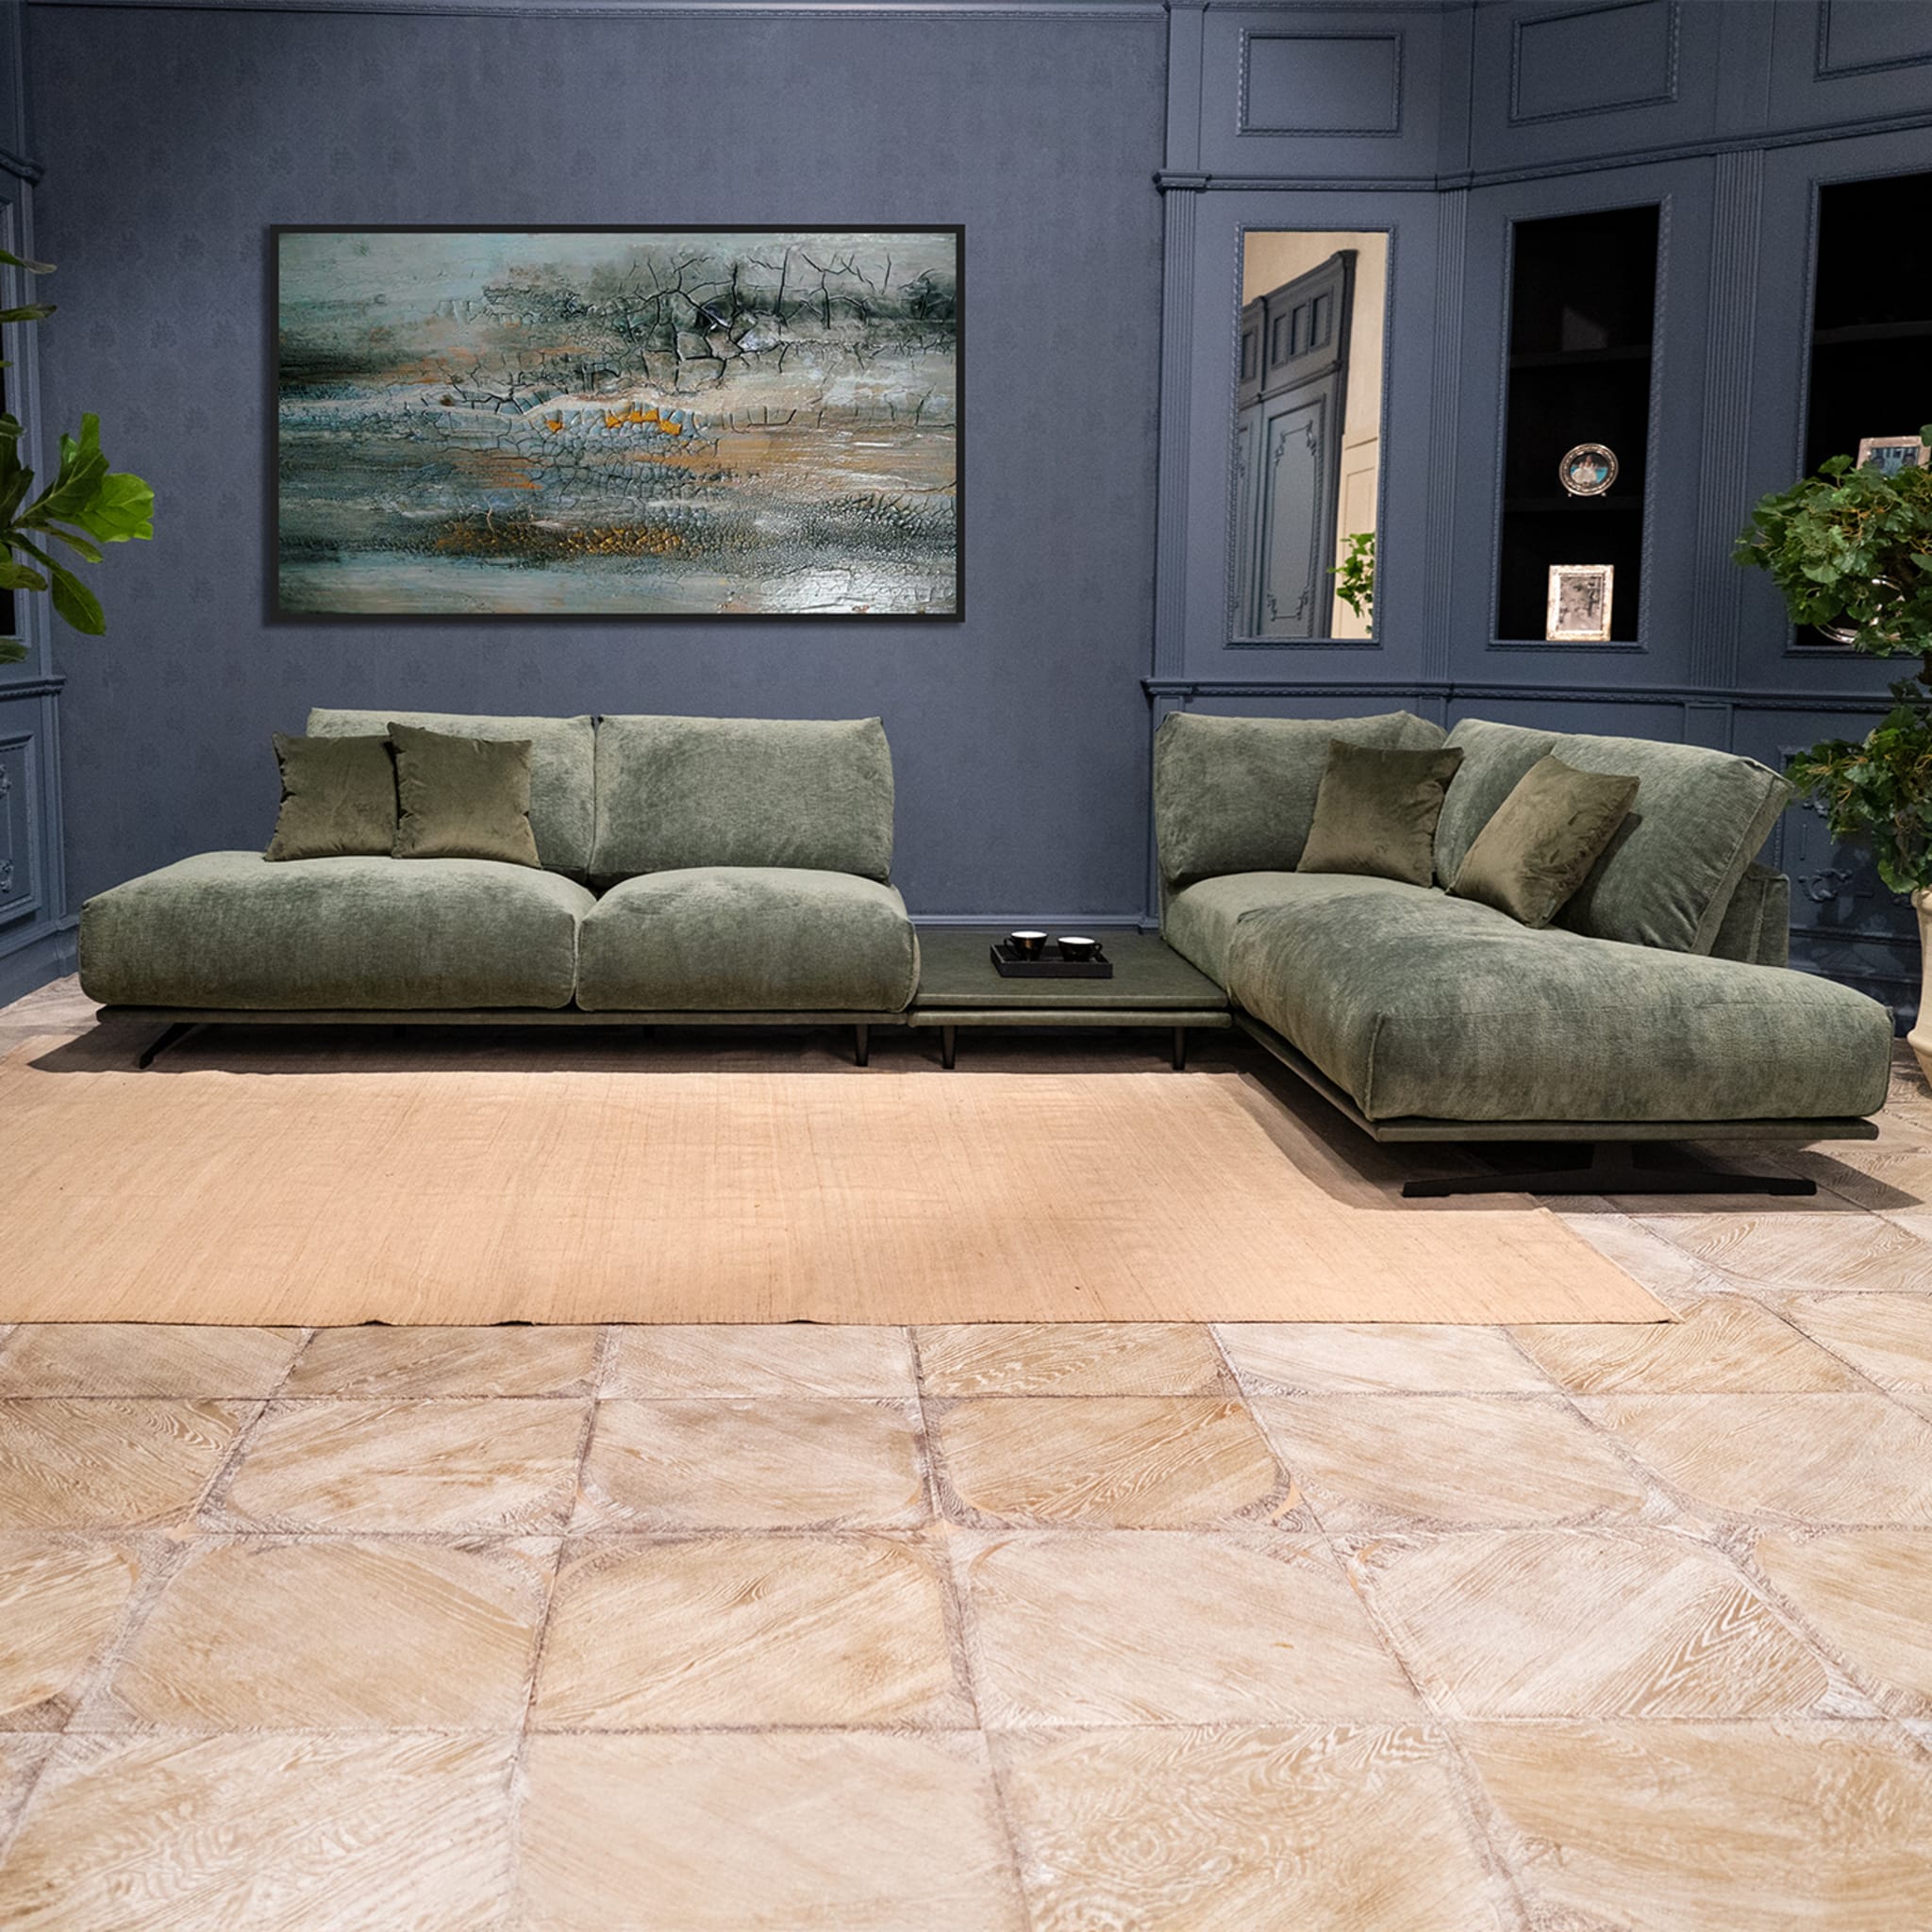  Boboli Green Corner Sofa with Side Table - Alternative view 3